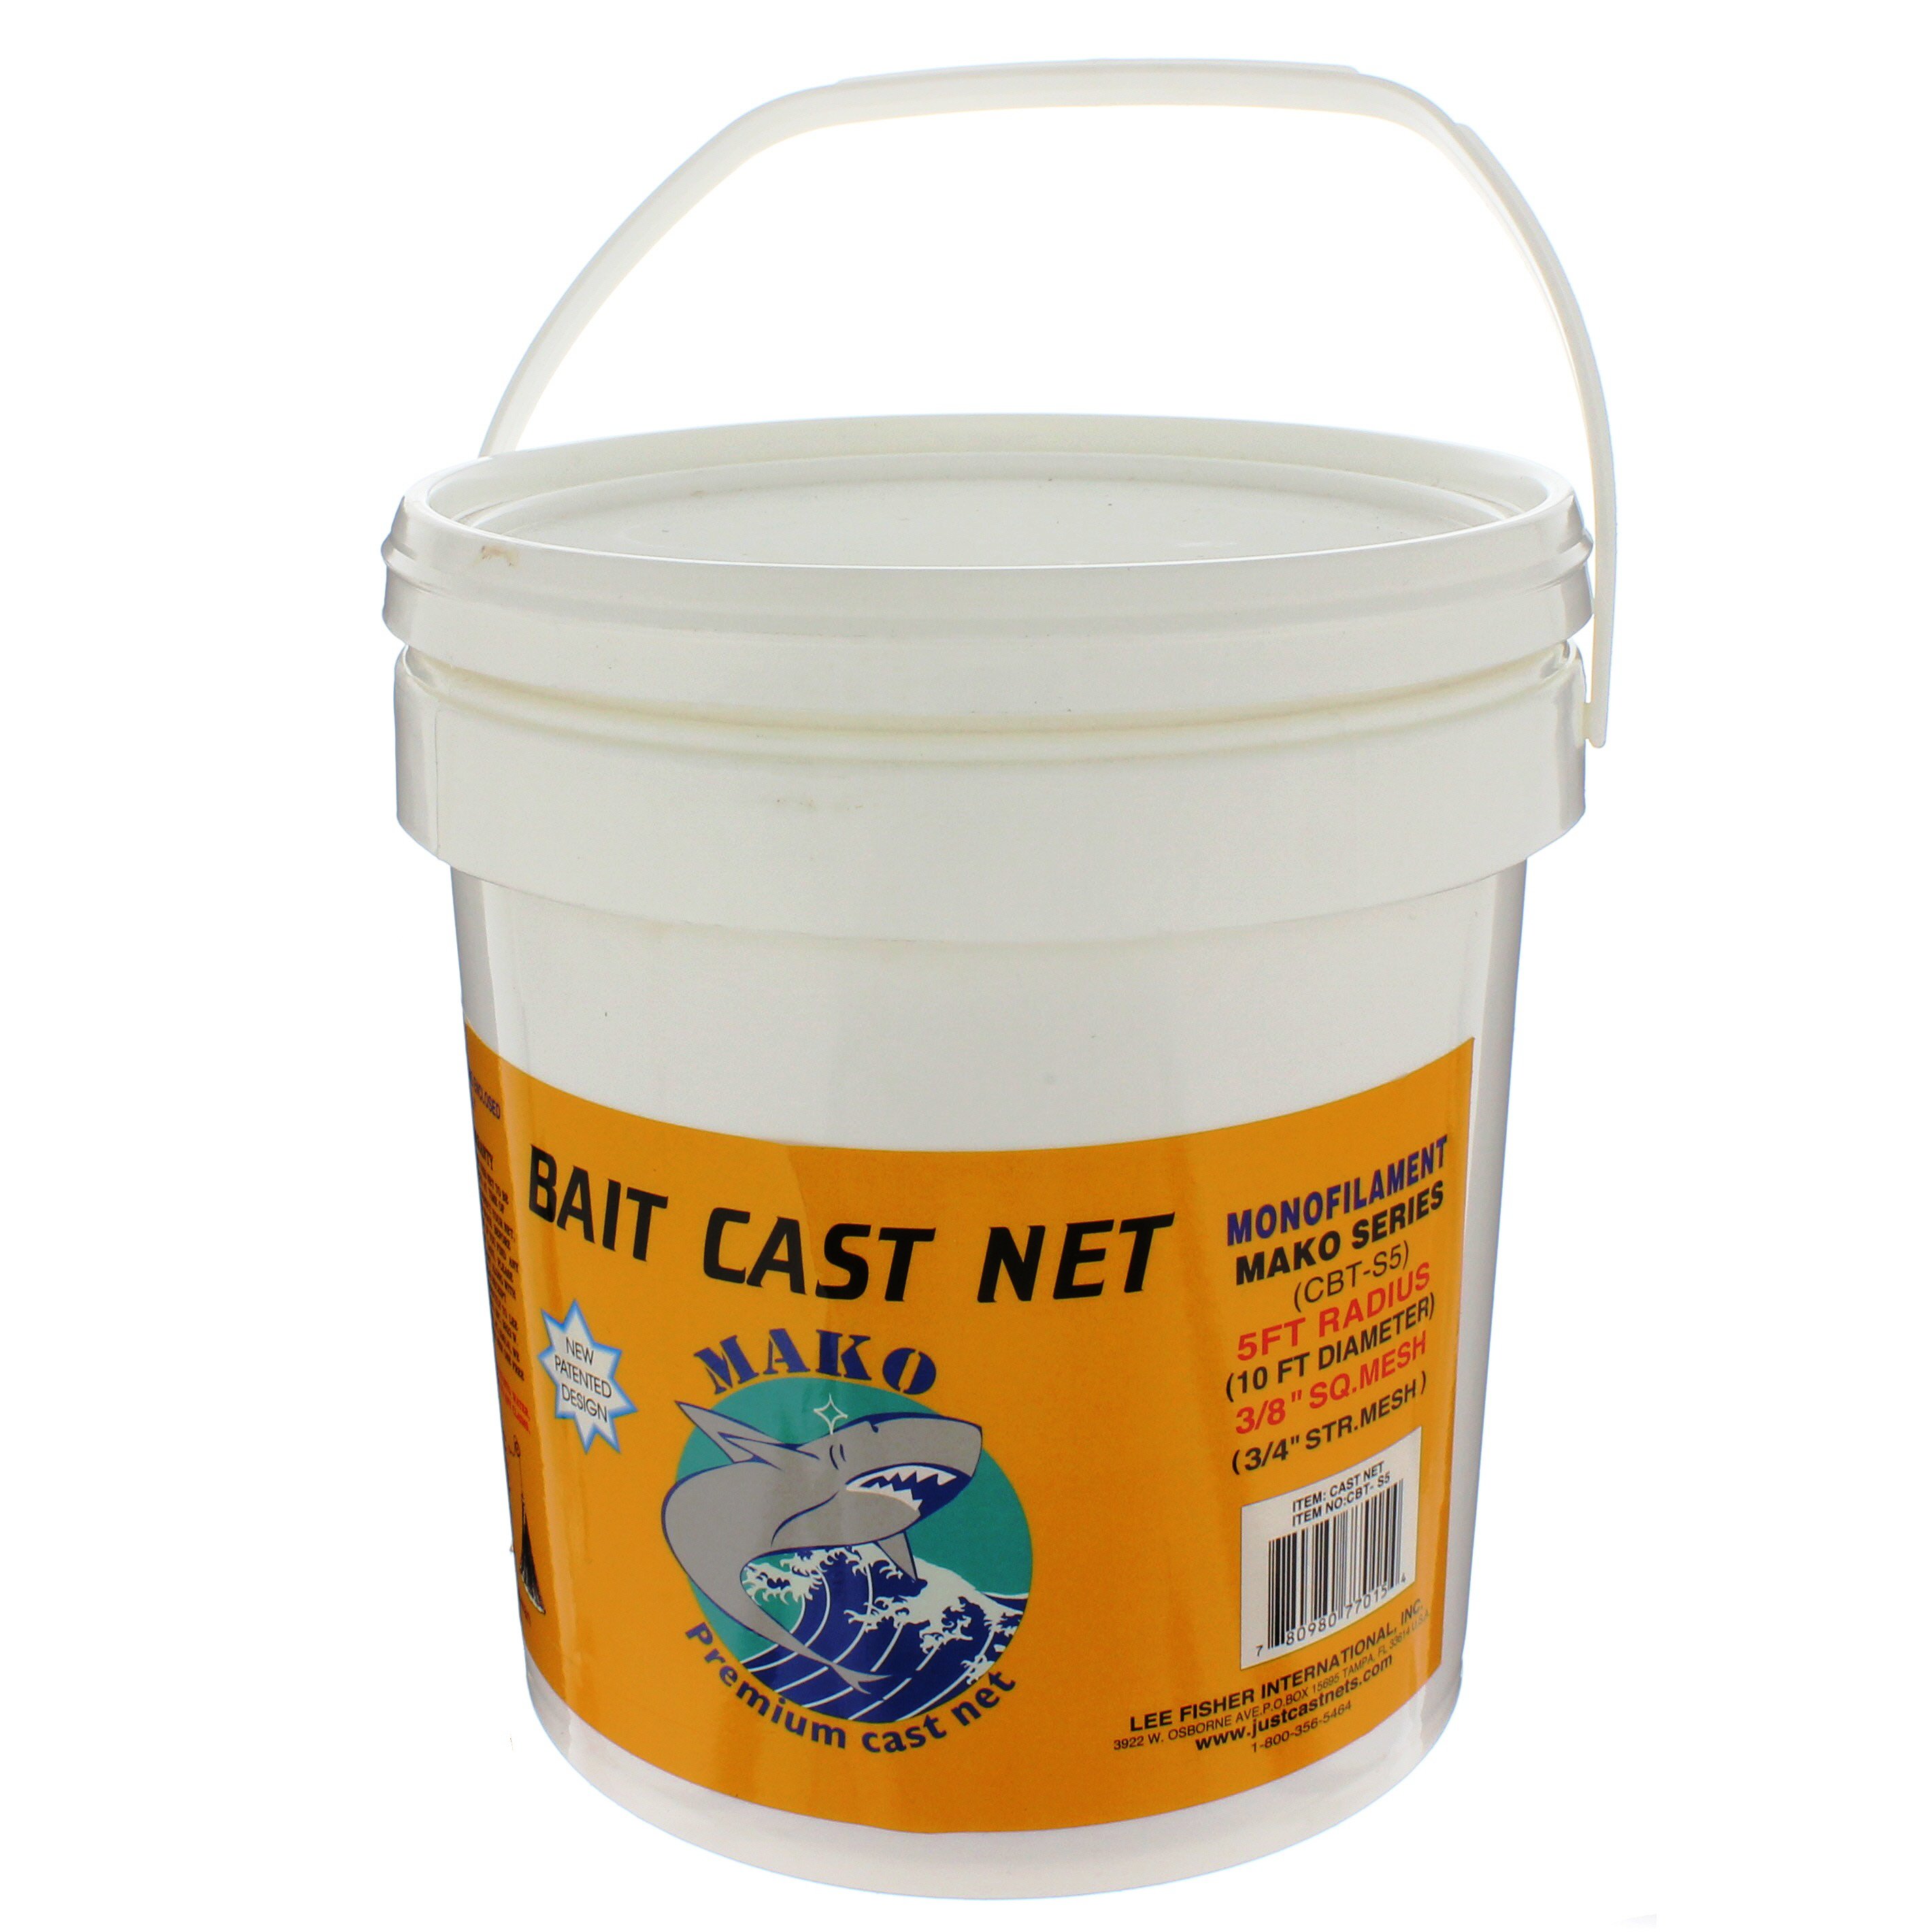 Lee Fisher 5 Feet Nylon Monofilament Bait Cast Net - Shop Fishing